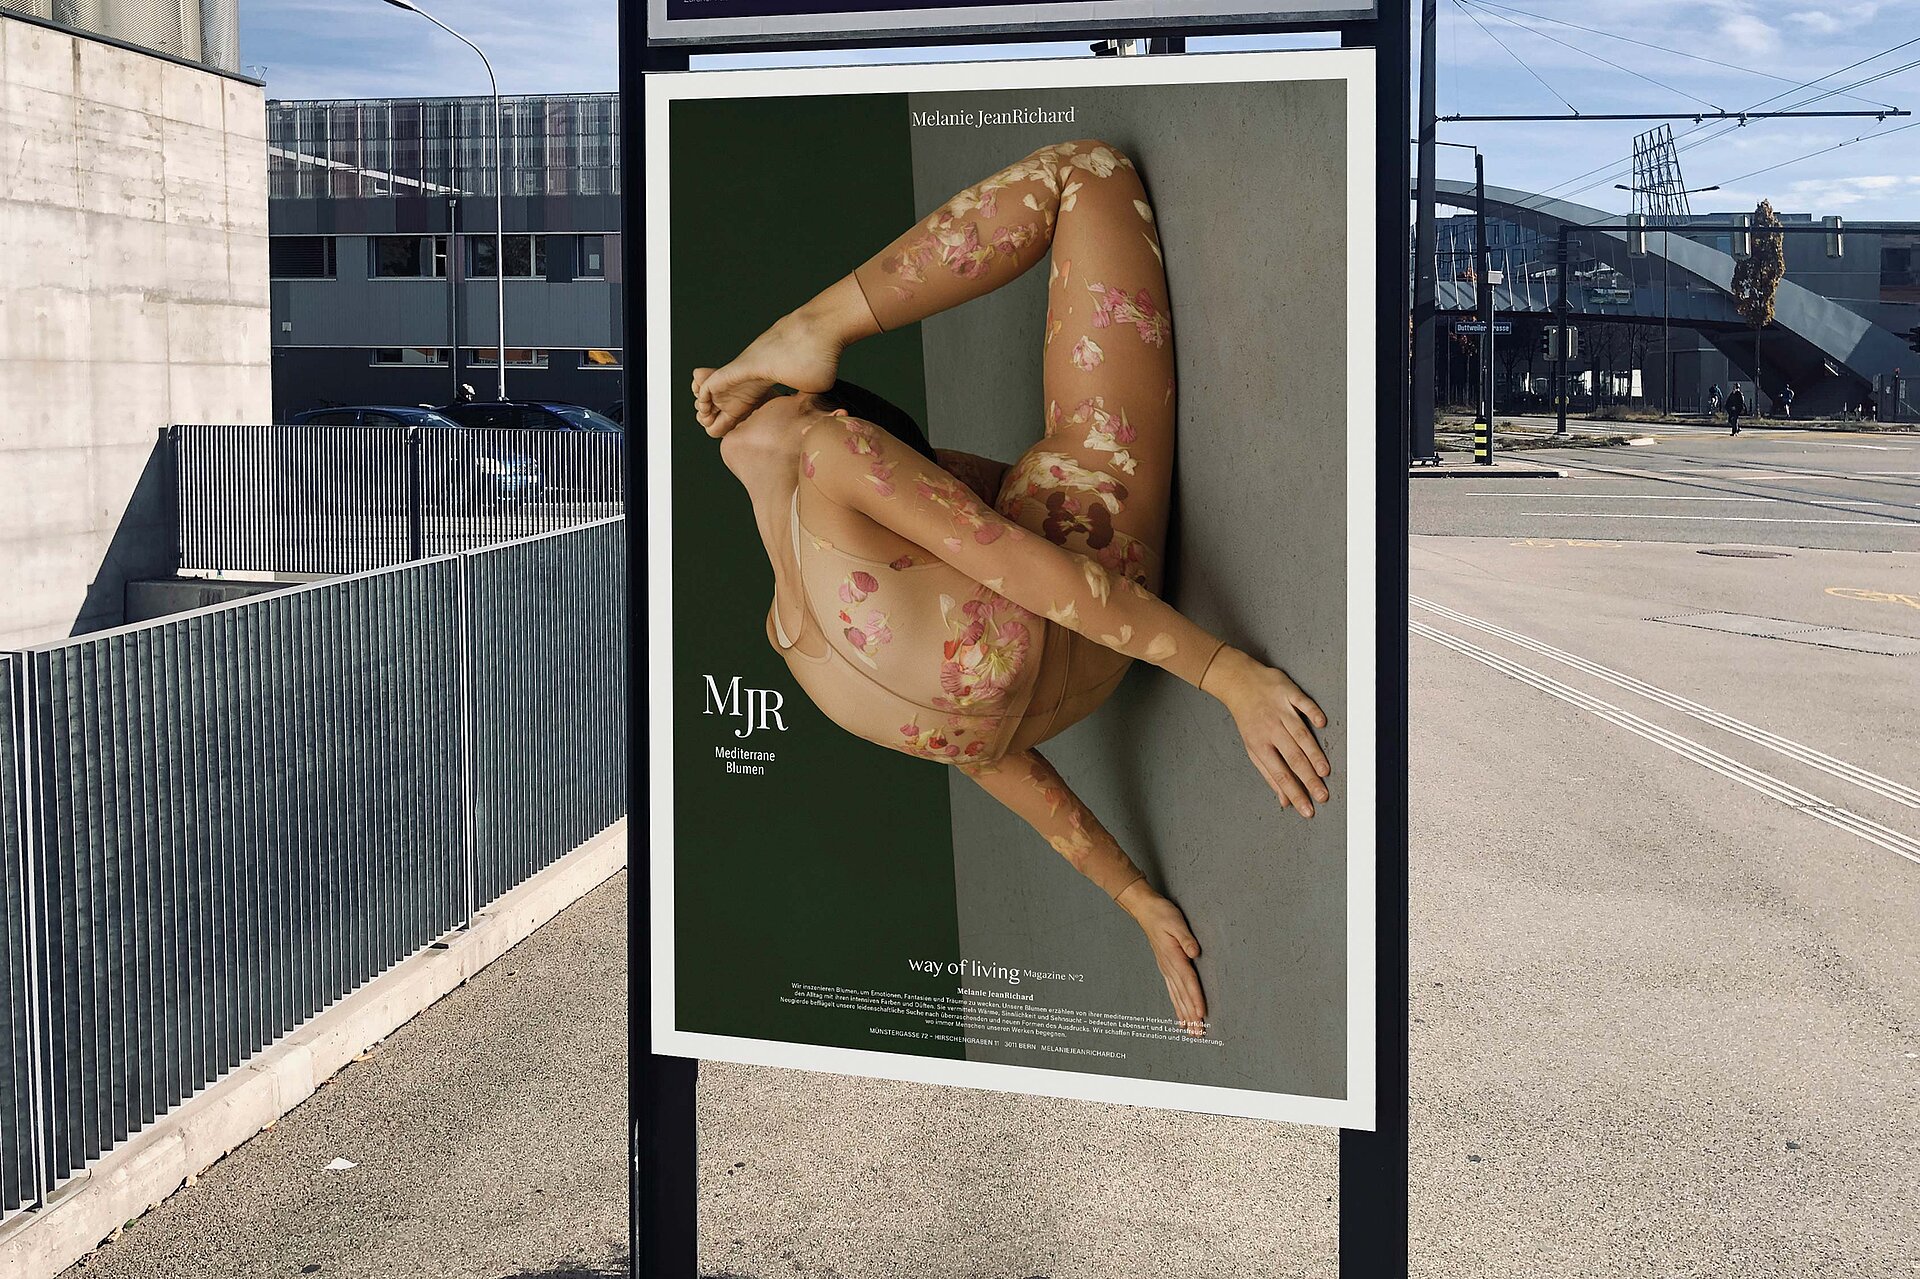 acrobatics with flower body Poster mockup advertising bern